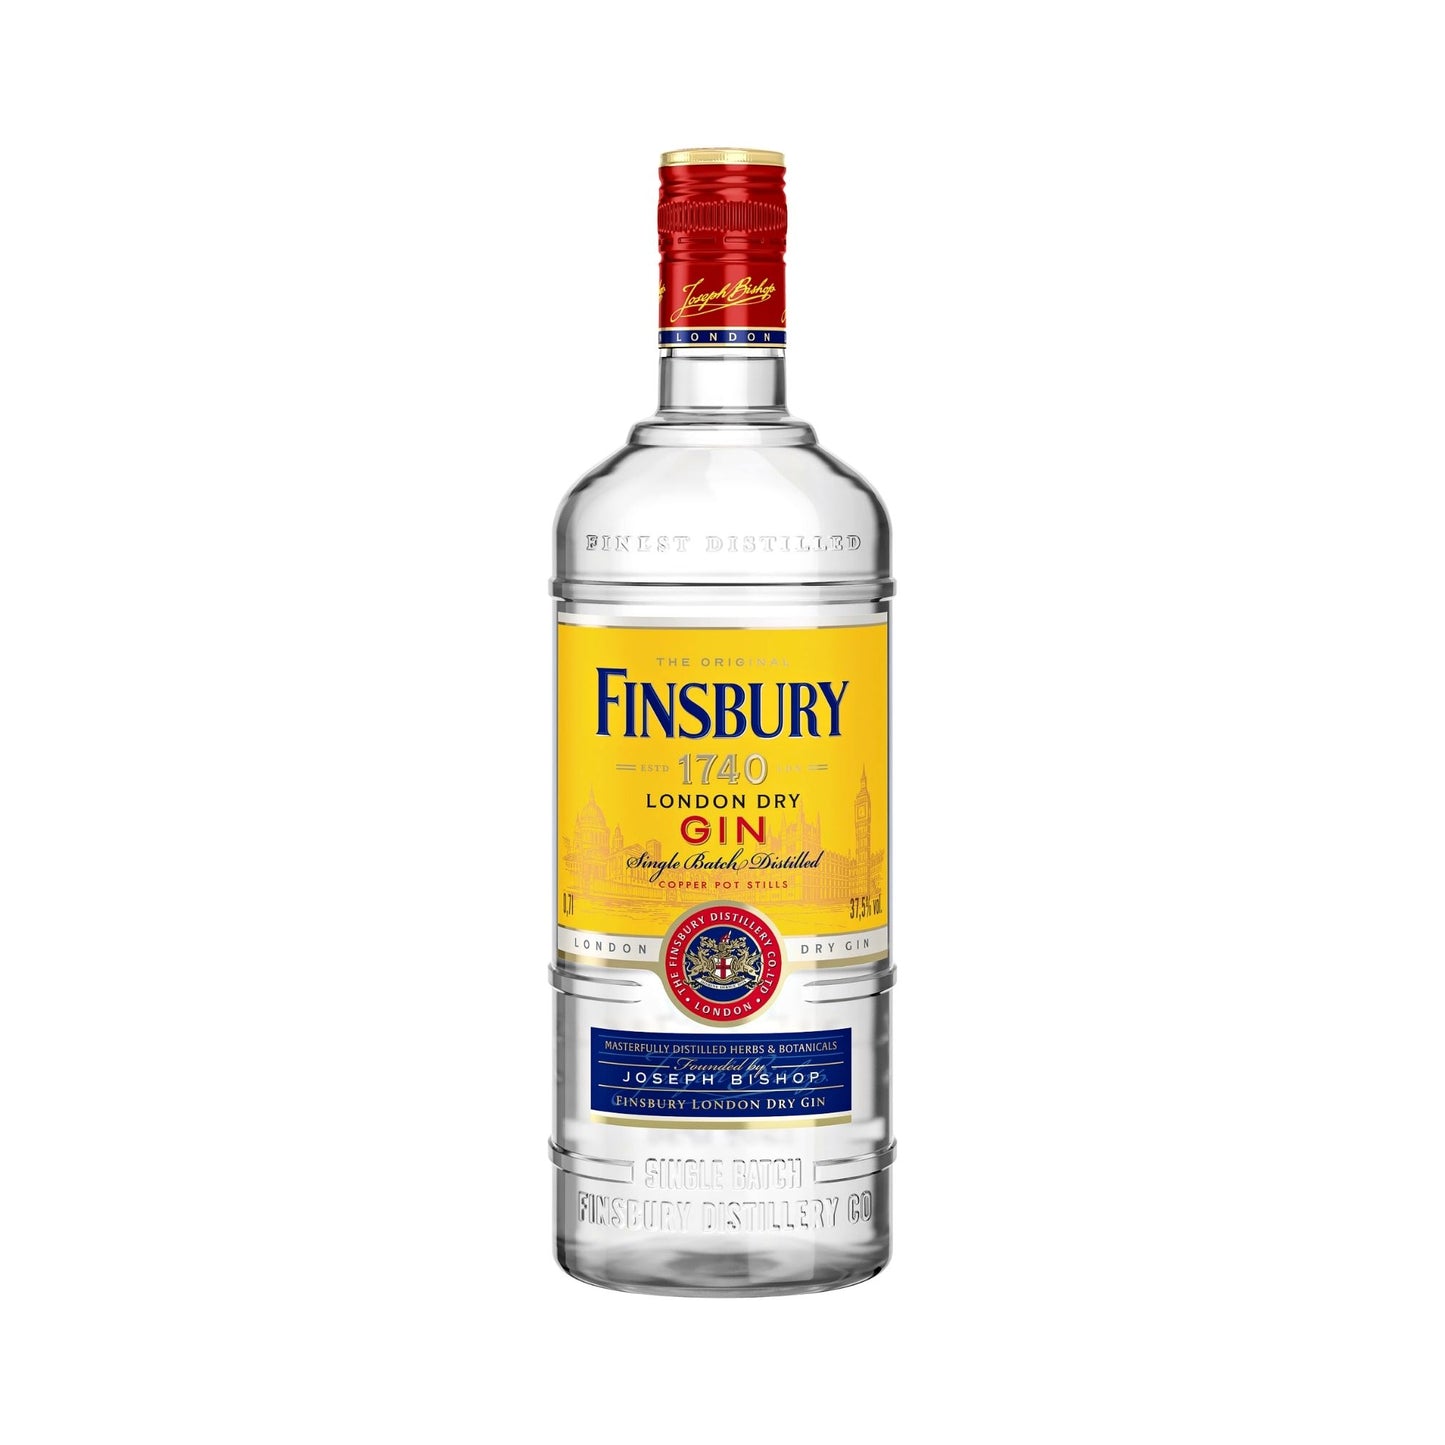 FINSBURY GIN 0.7LT